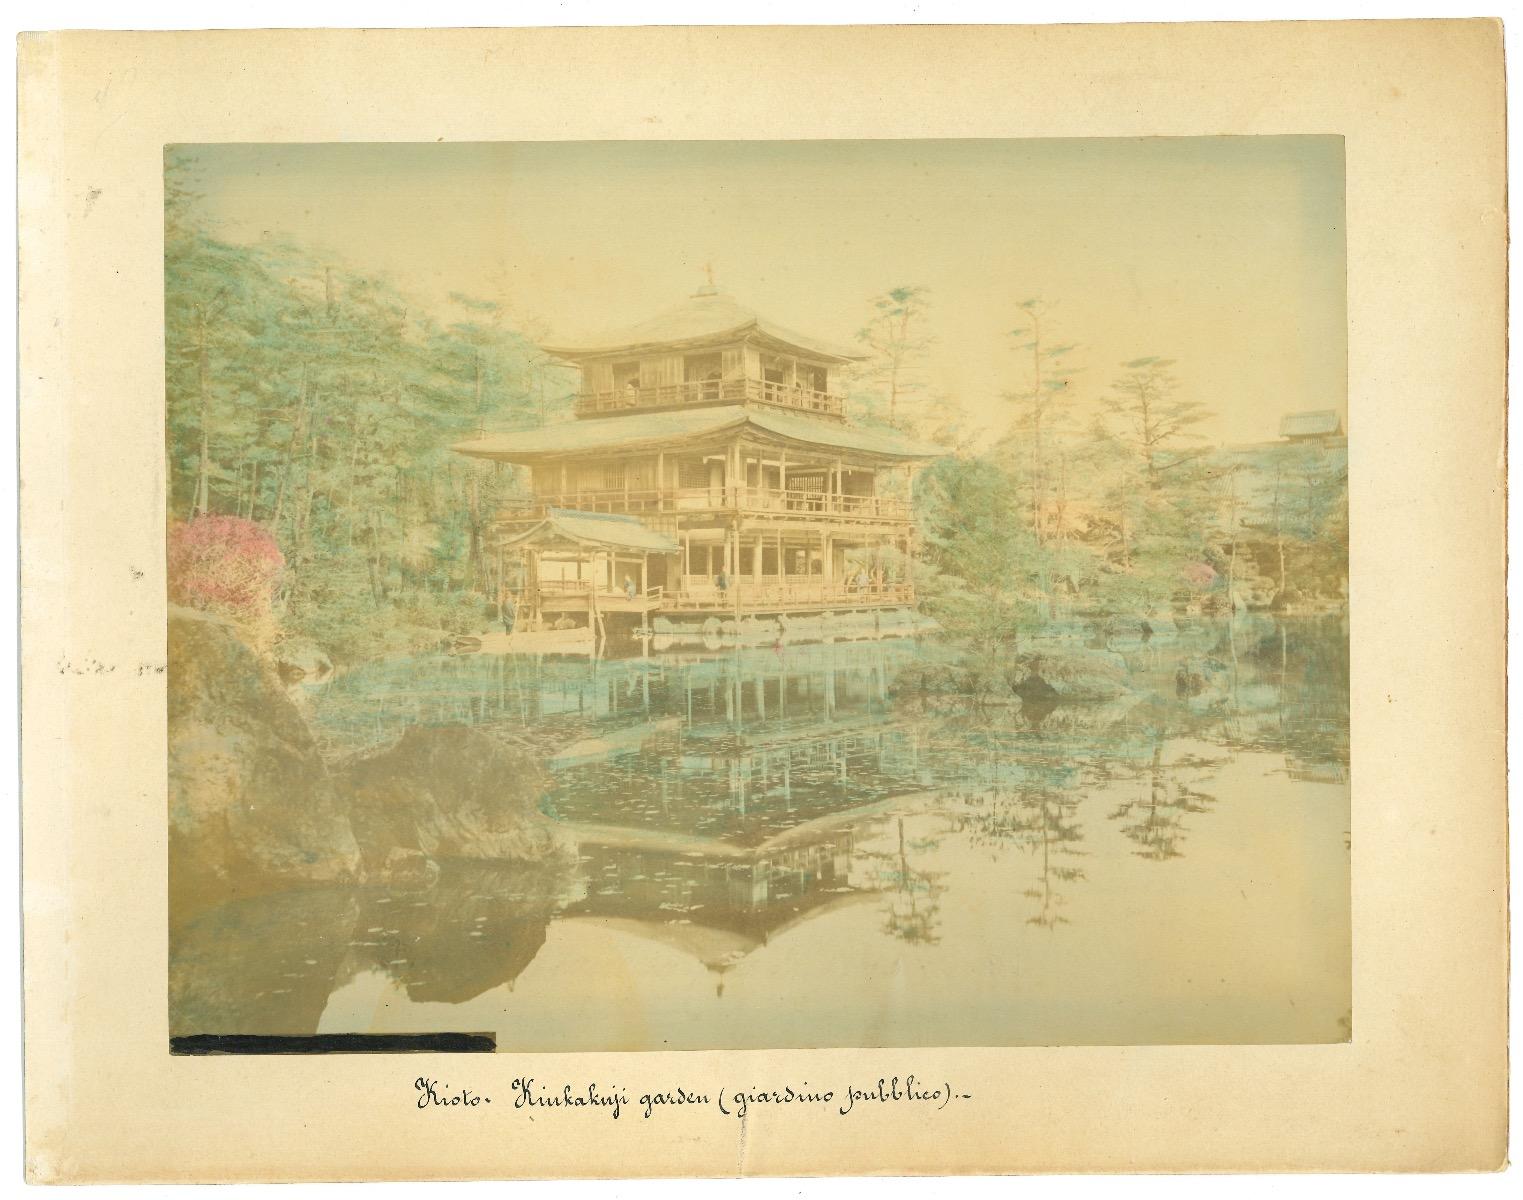 Unknown Landscape Photograph - Ancient View of Kyoto, Kingkakuji Garden, - Original Albumen Print - 1880s/90s